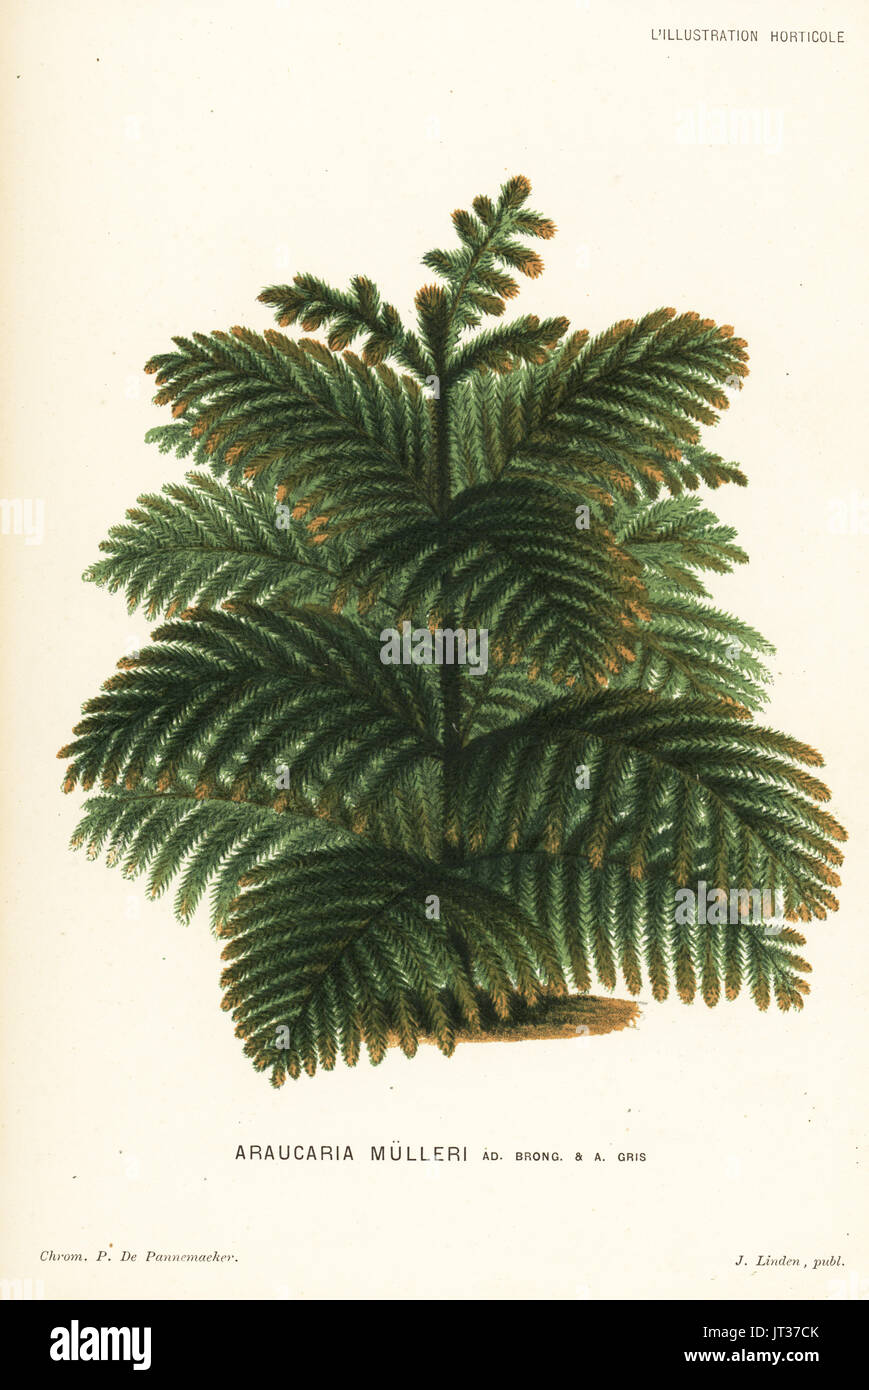 Araucaria muelleri conifer tree (Araucaria mulleri). Chromolithograph by P. de Pannemaeker from Jean Linden's l'Illustration Horticole, Brussels, 1882. Stock Photo